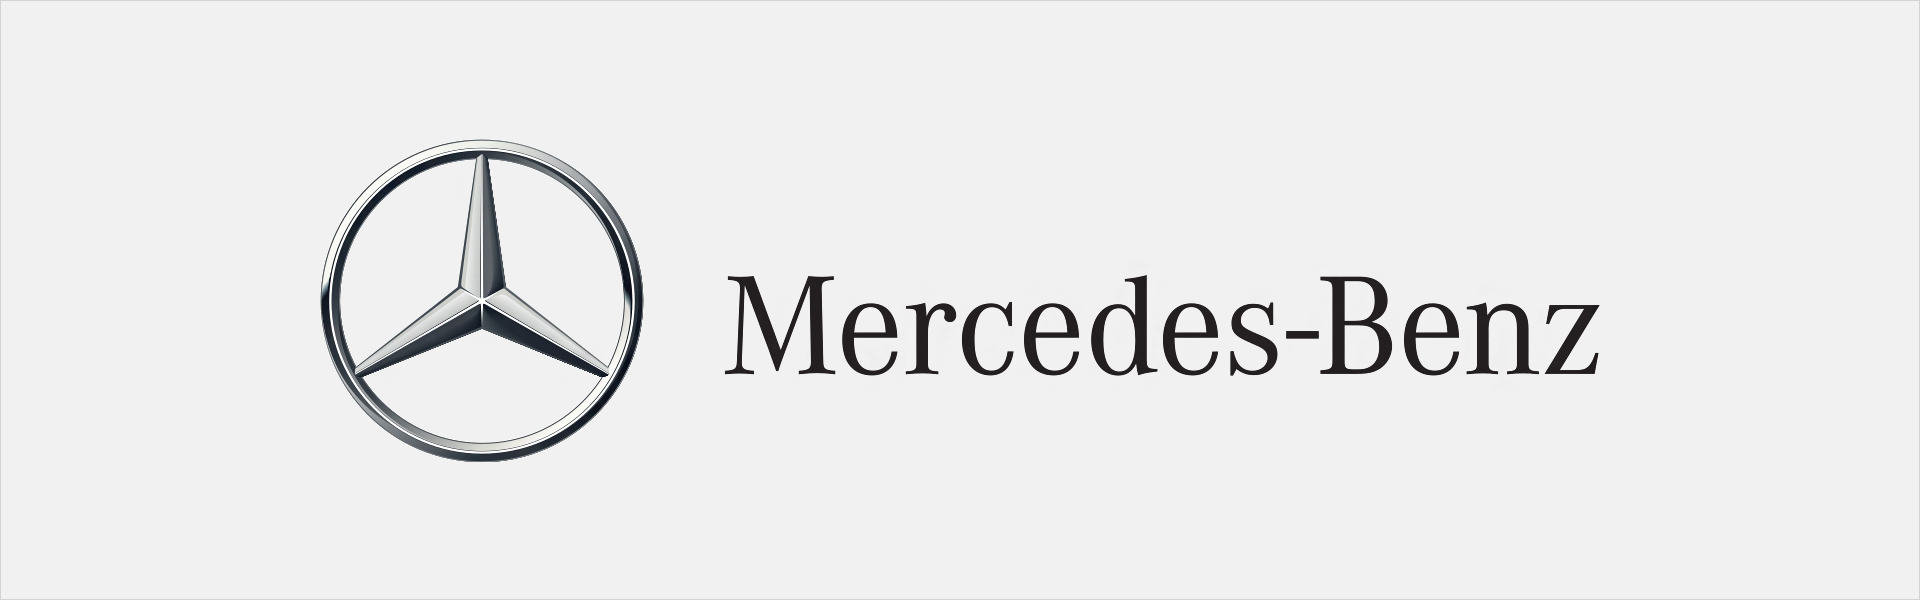 Mercedes-Benz Rose EDT naistele, 90 ml Mercedes-Benz